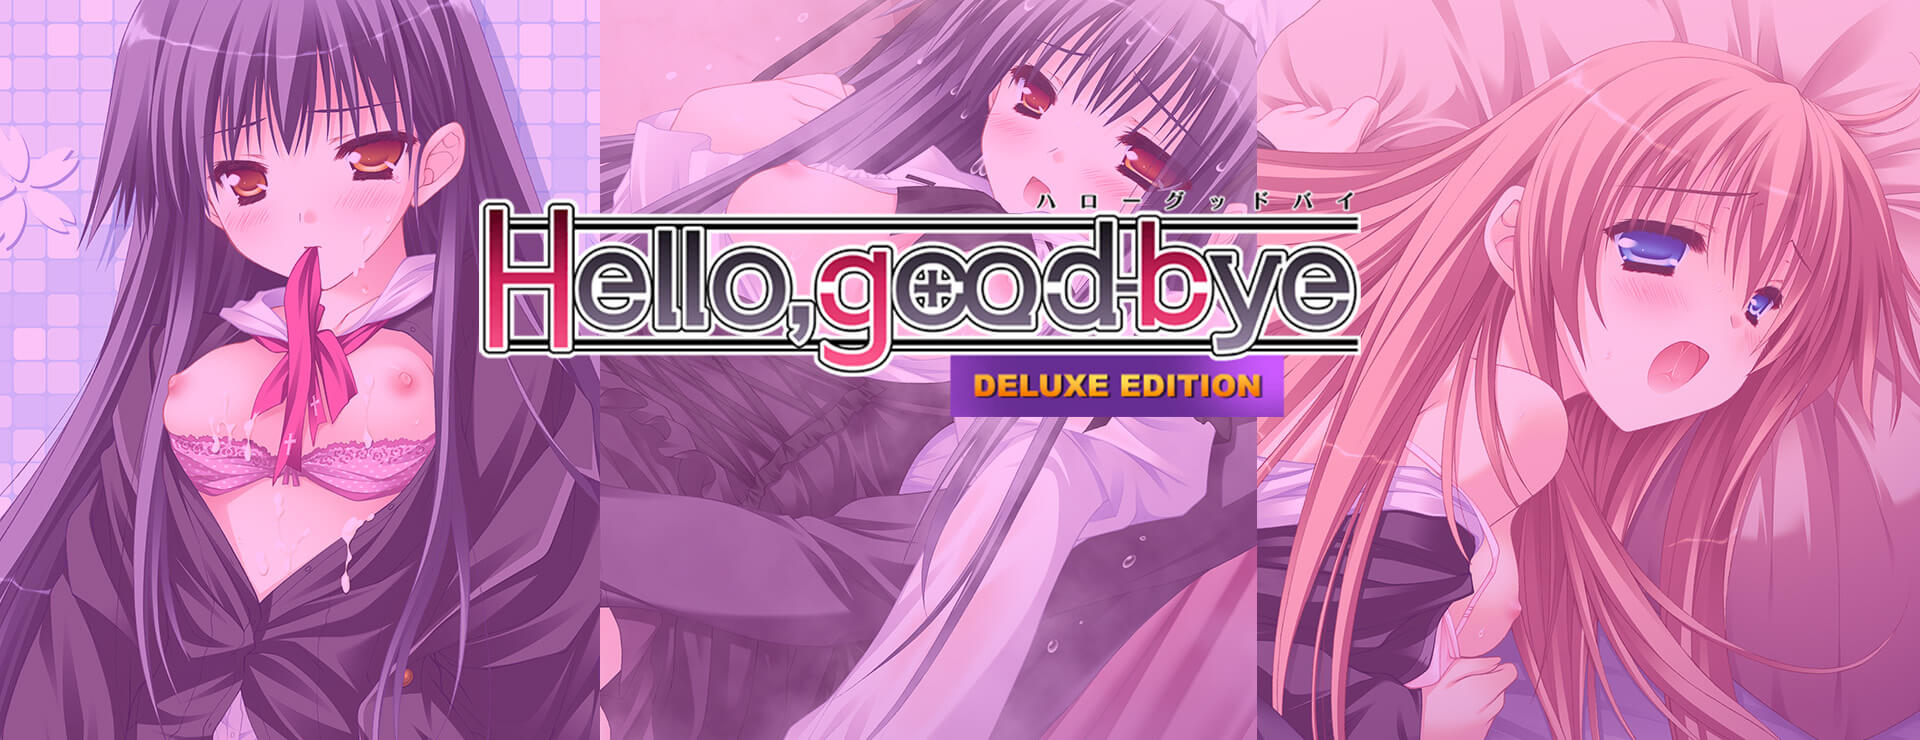 Hello, Goodbye (Deluxe Edition) - Novela Visual Juego